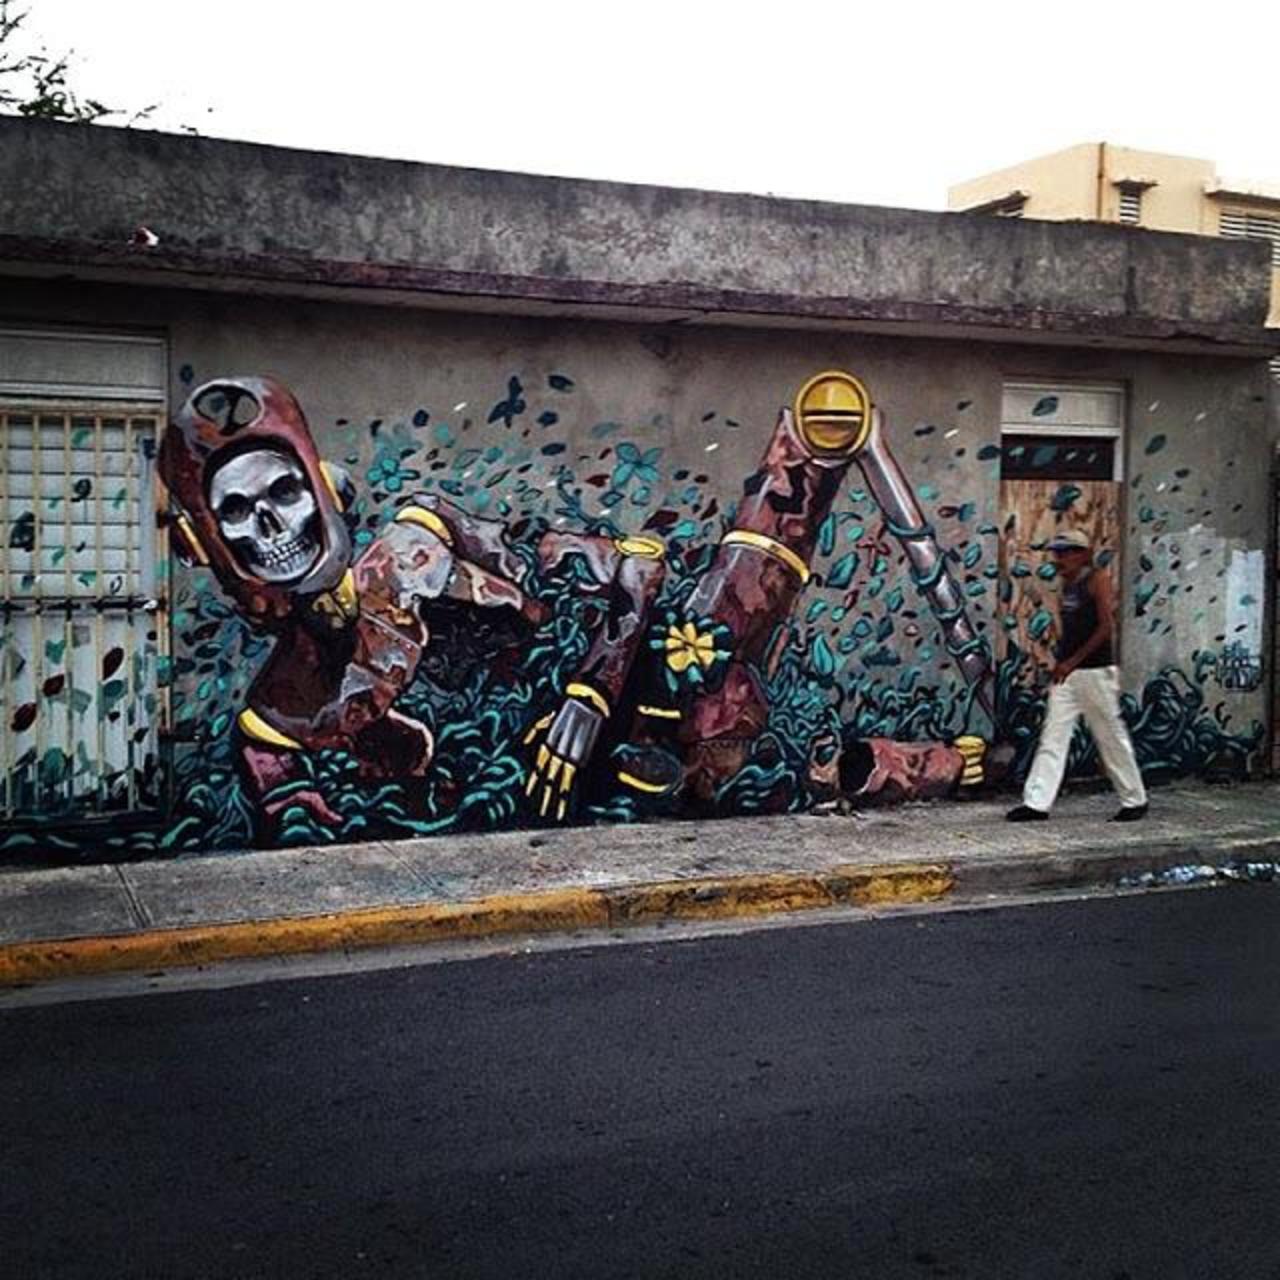 Pixel Pancho 
#streetart #art #graffiti #urbanart http://t.co/6v0XY3UofZ